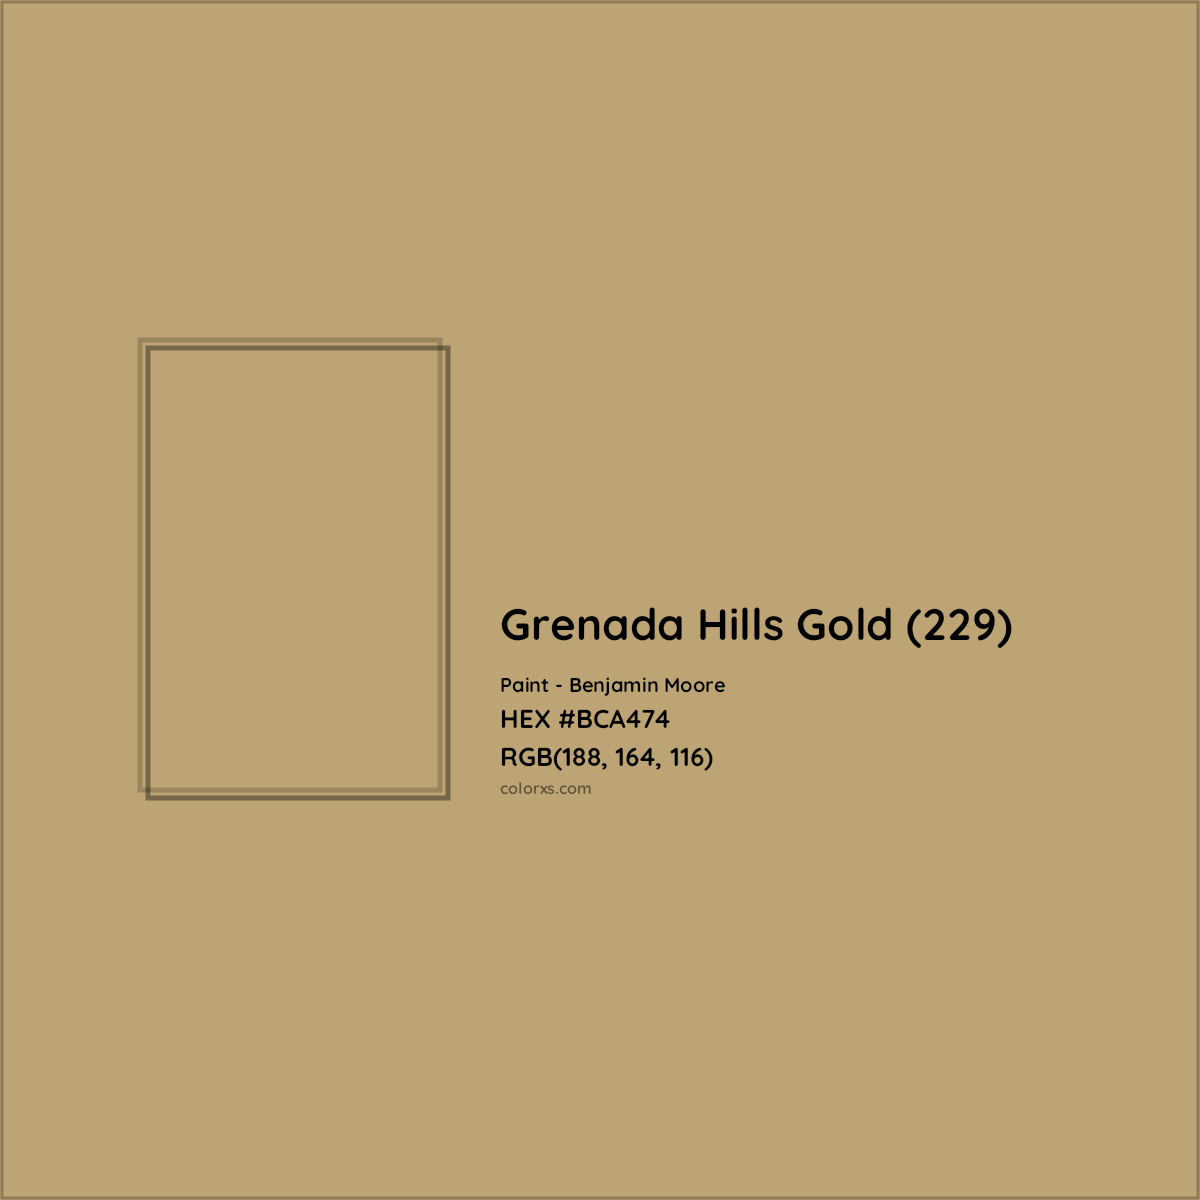 HEX #BCA474 Grenada Hills Gold (229) Paint Benjamin Moore - Color Code